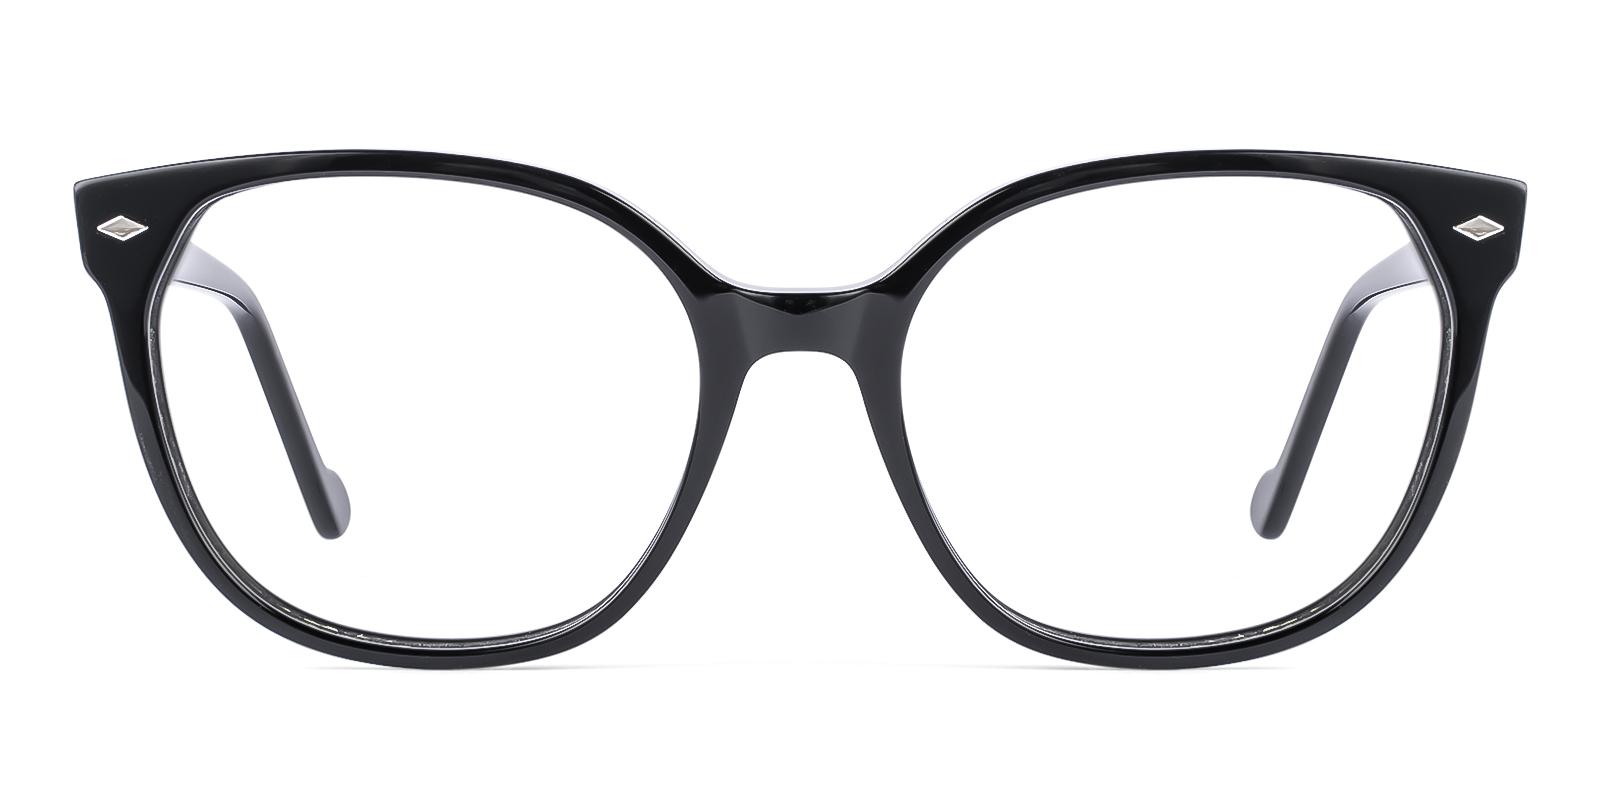 Landel Black Acetate Eyeglasses , SpringHinges , UniversalBridgeFit Frames from ABBE Glasses